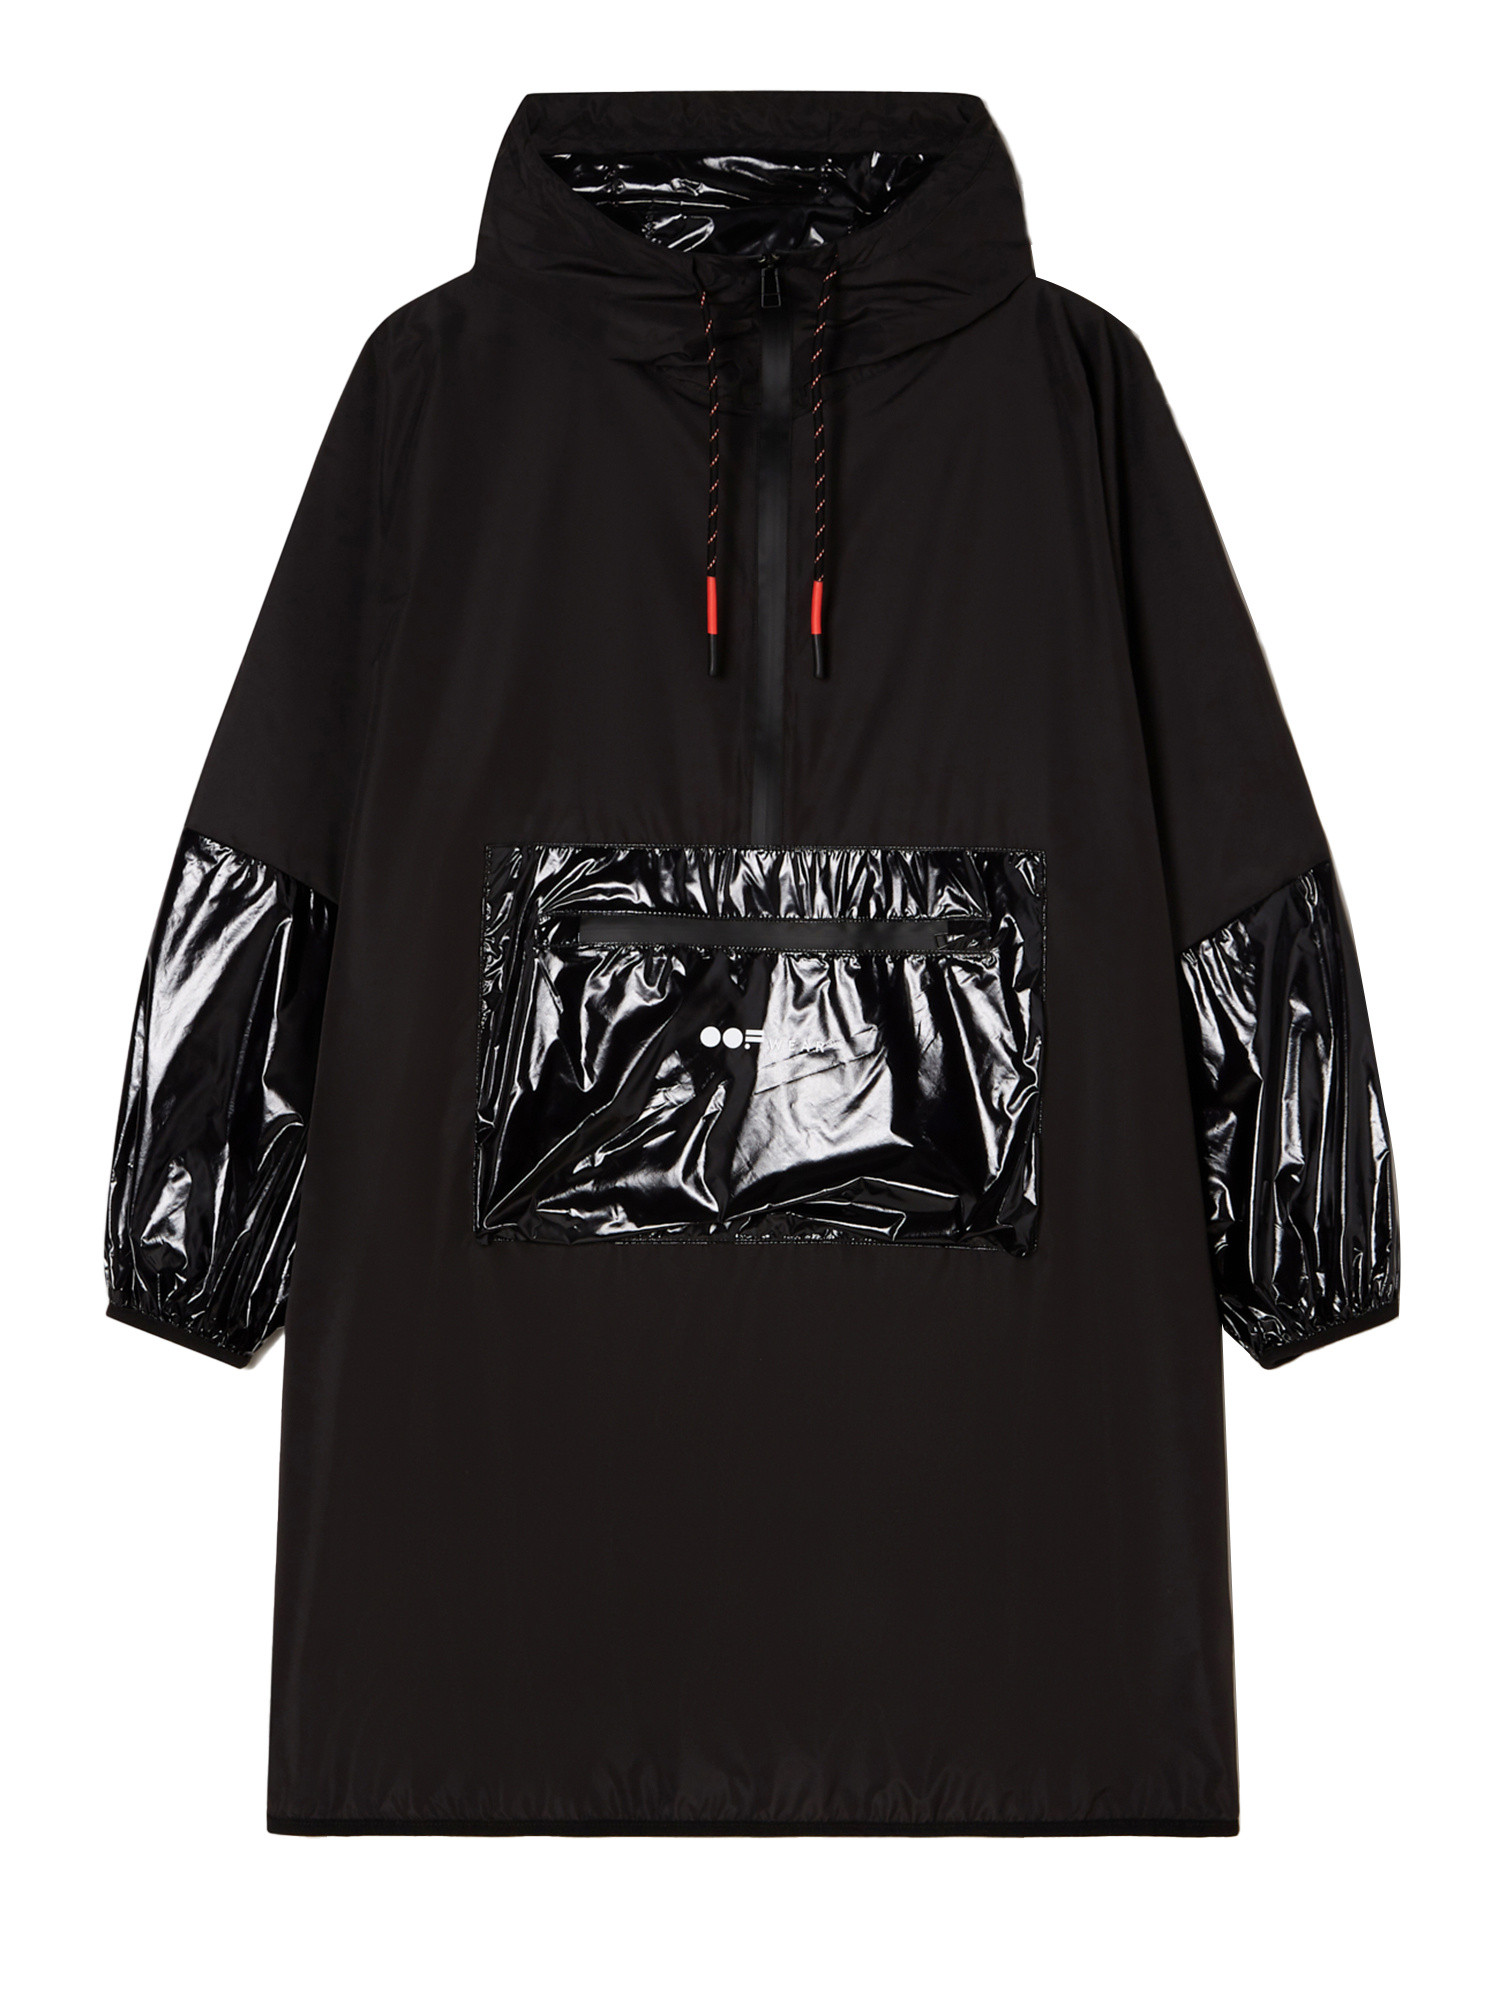 Oof Wear - Hooded cape, Black, large image number 0